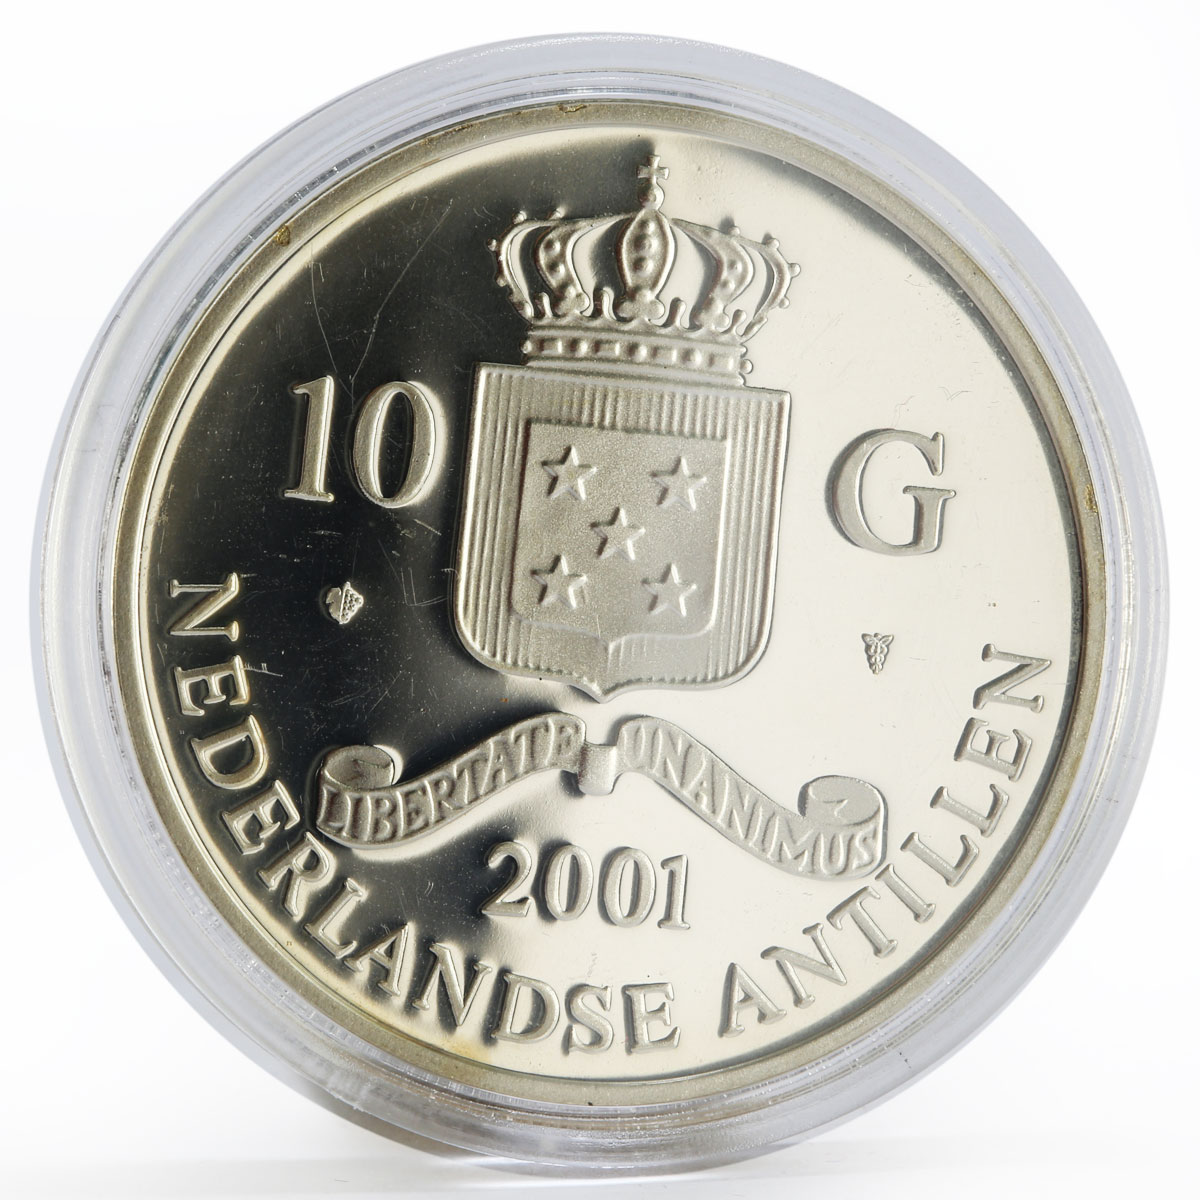 Netherlands Antilles 10 gulden Isabella and Albrecht gilded silver coin 2001